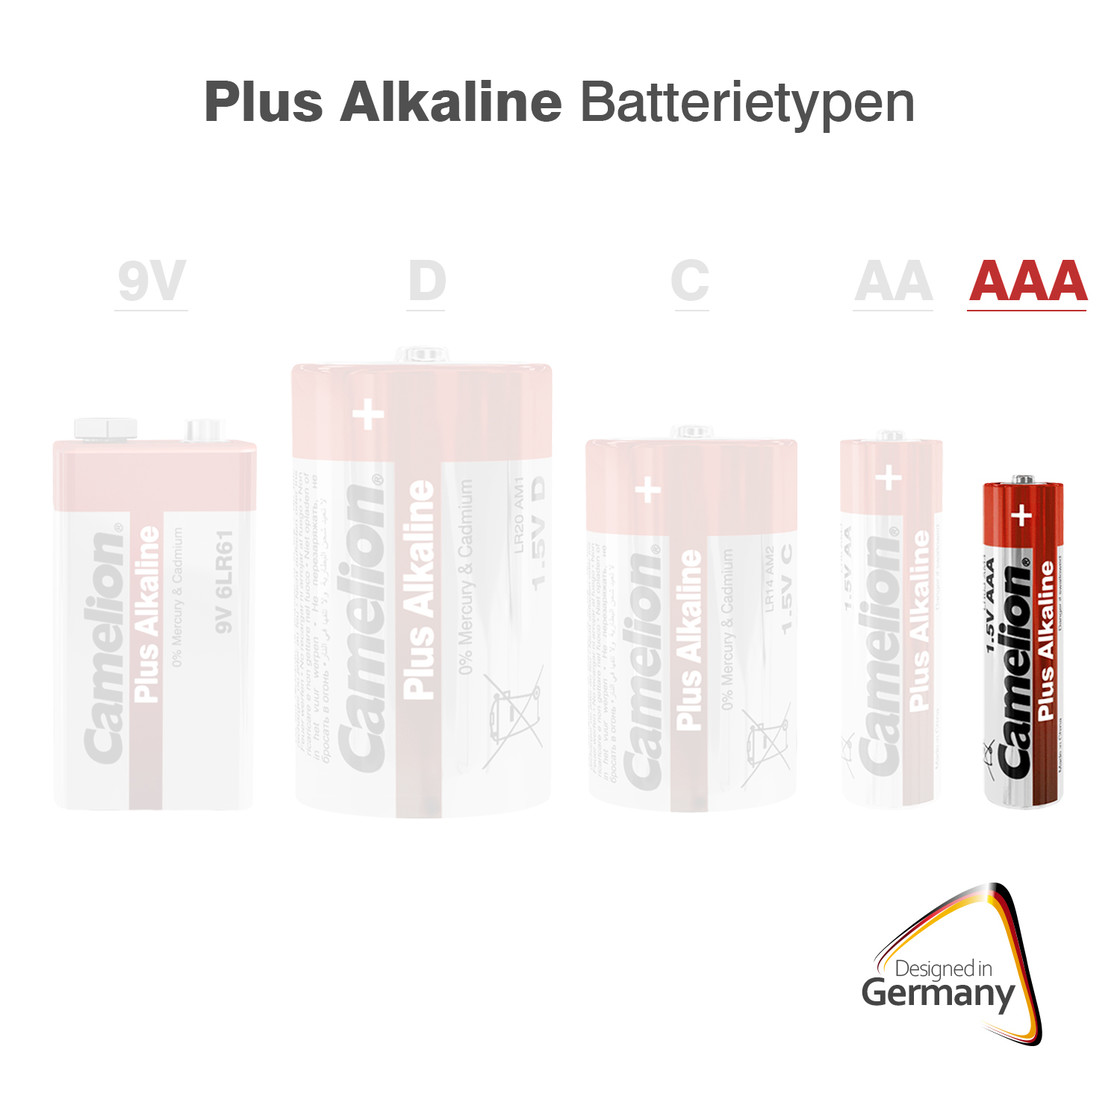 Camelion Plus Alkaline Batterien LR03 AAA 10er Pack